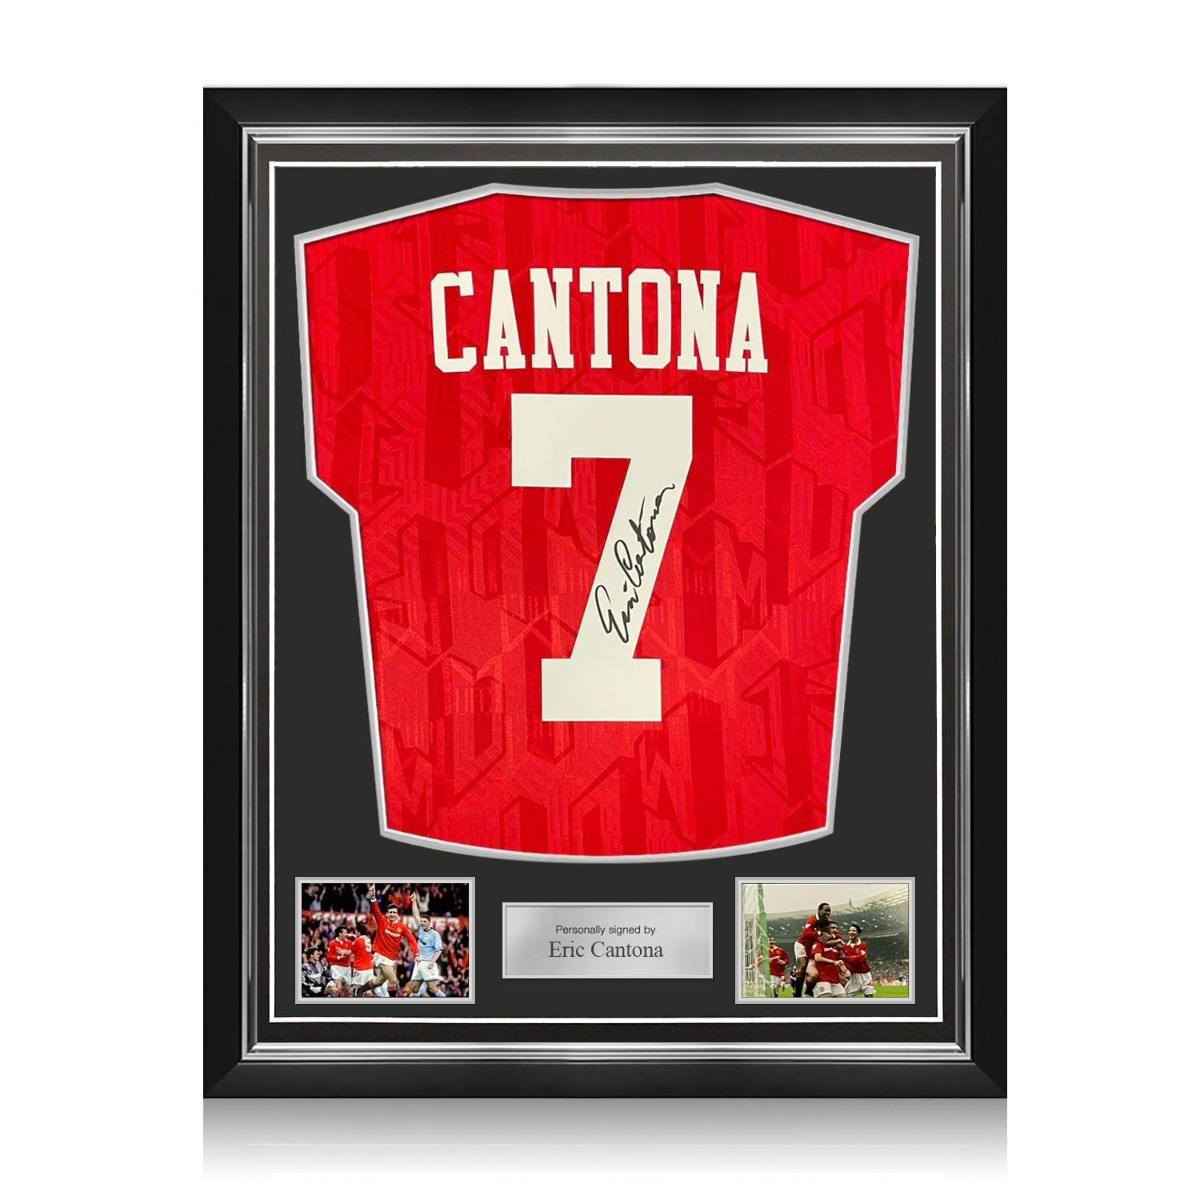 Manchester United 1994 shirt gesigneerd door Eric Cantona. Superieur frame